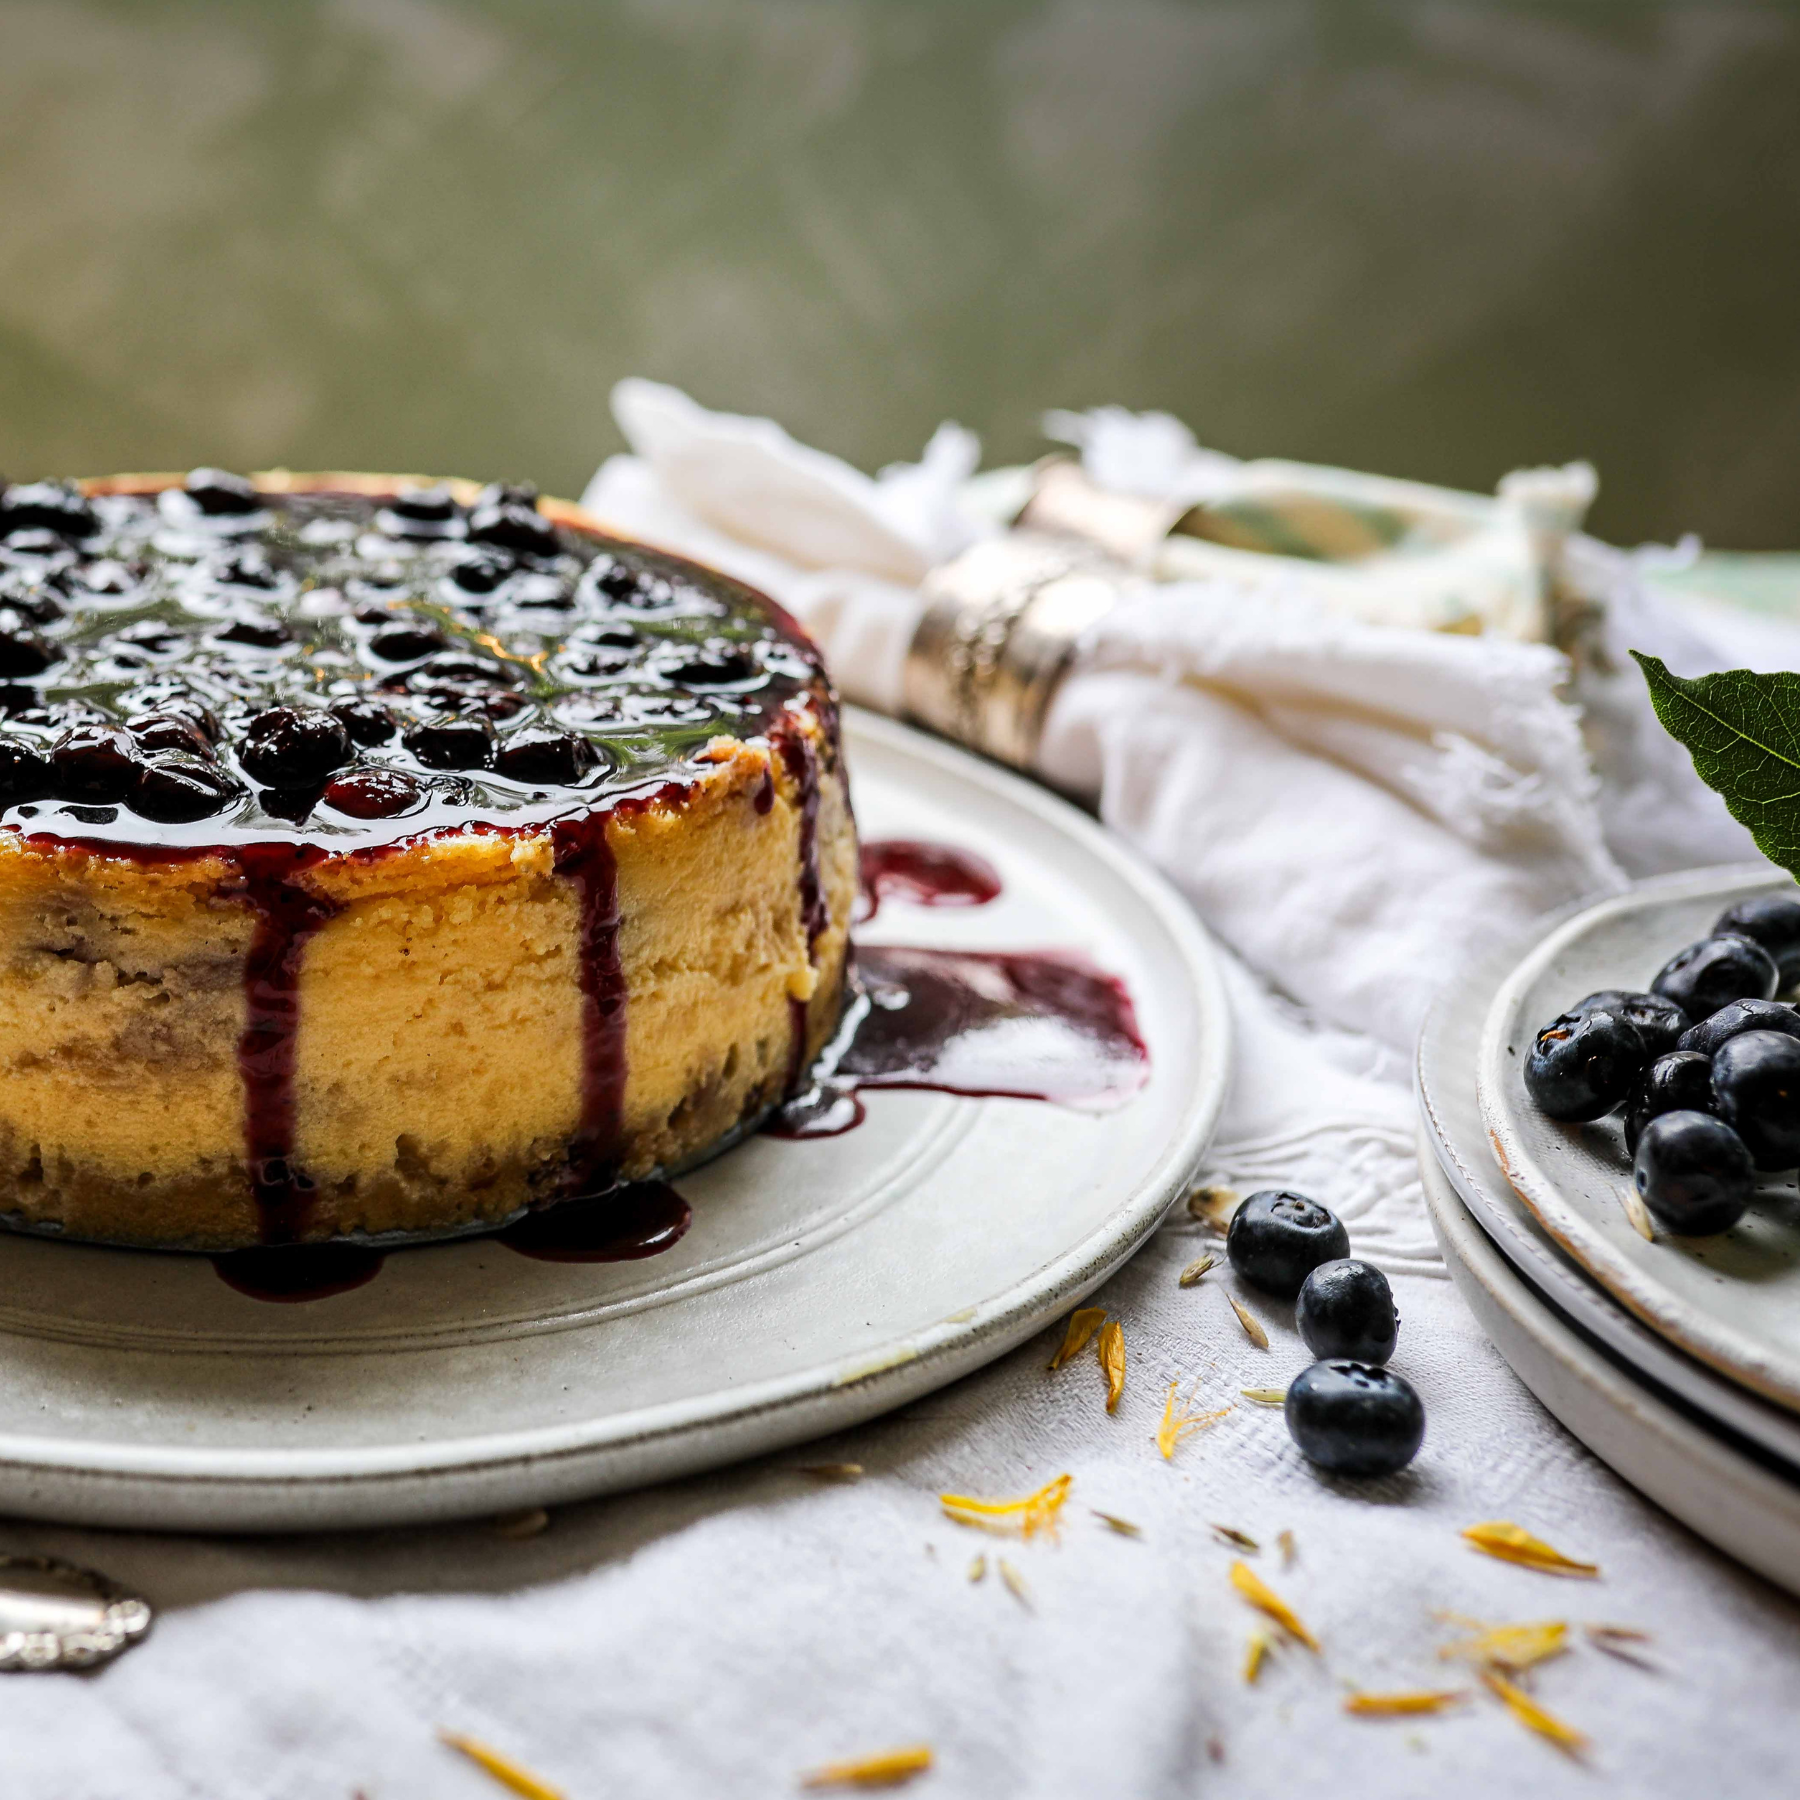 James Strawbridge's Baked Blueberry Cheesecake